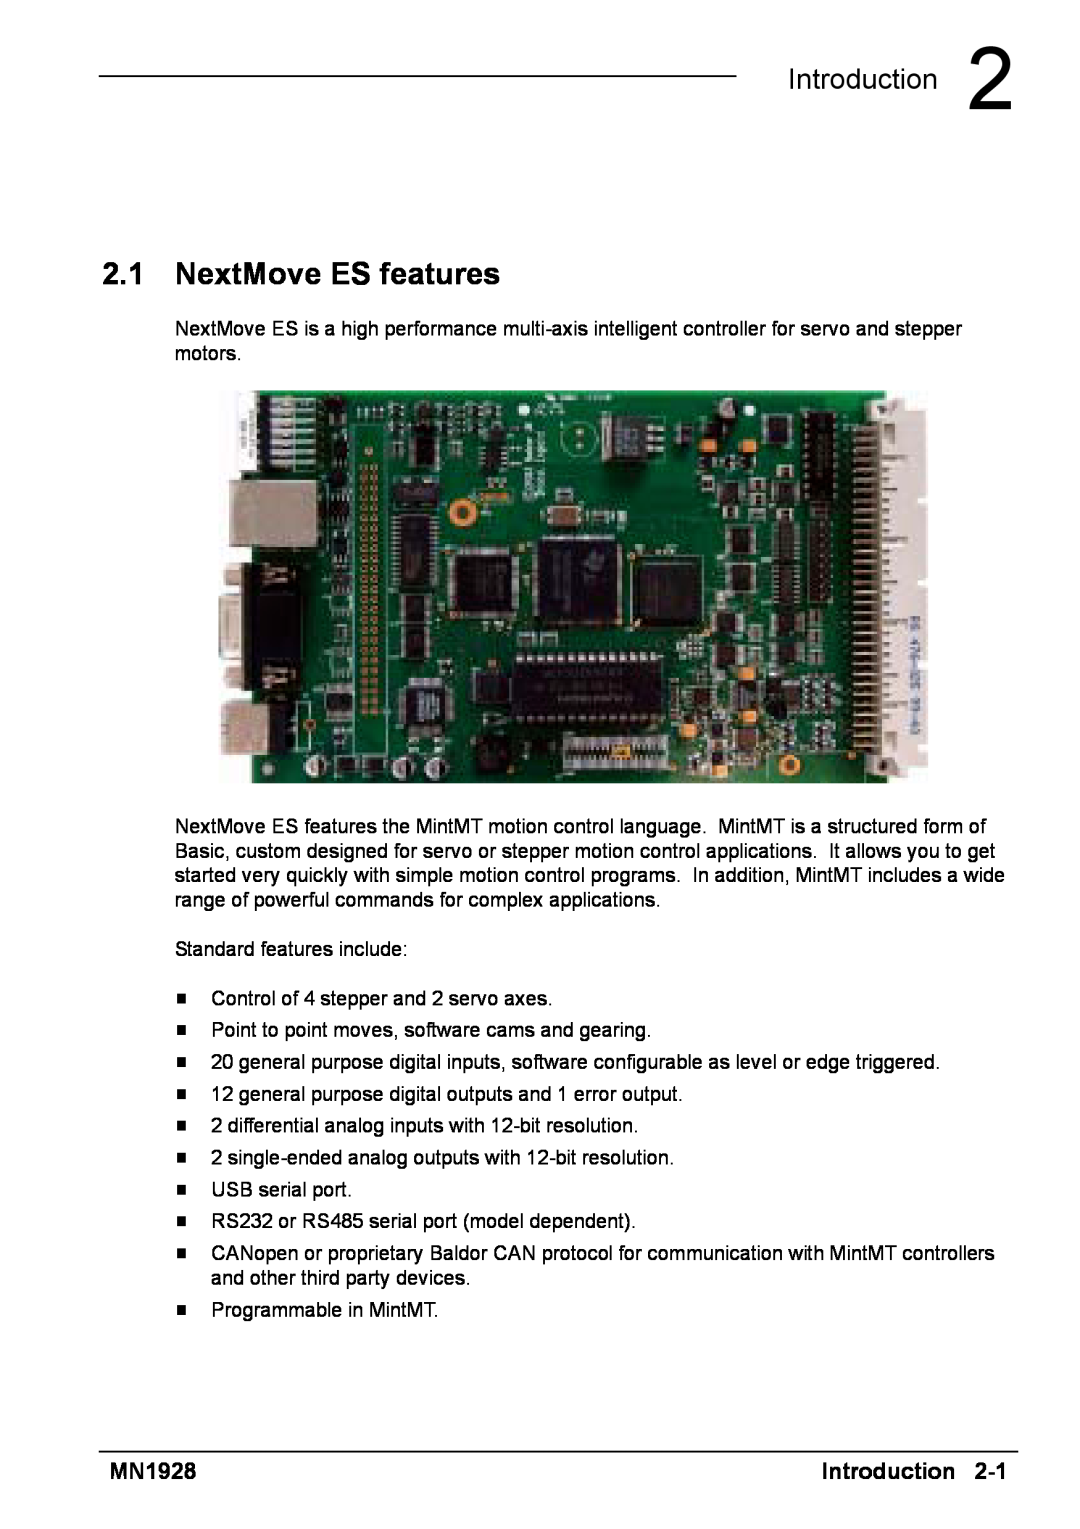 Baldor MN1928 installation manual NextMove ES features, Introduction 